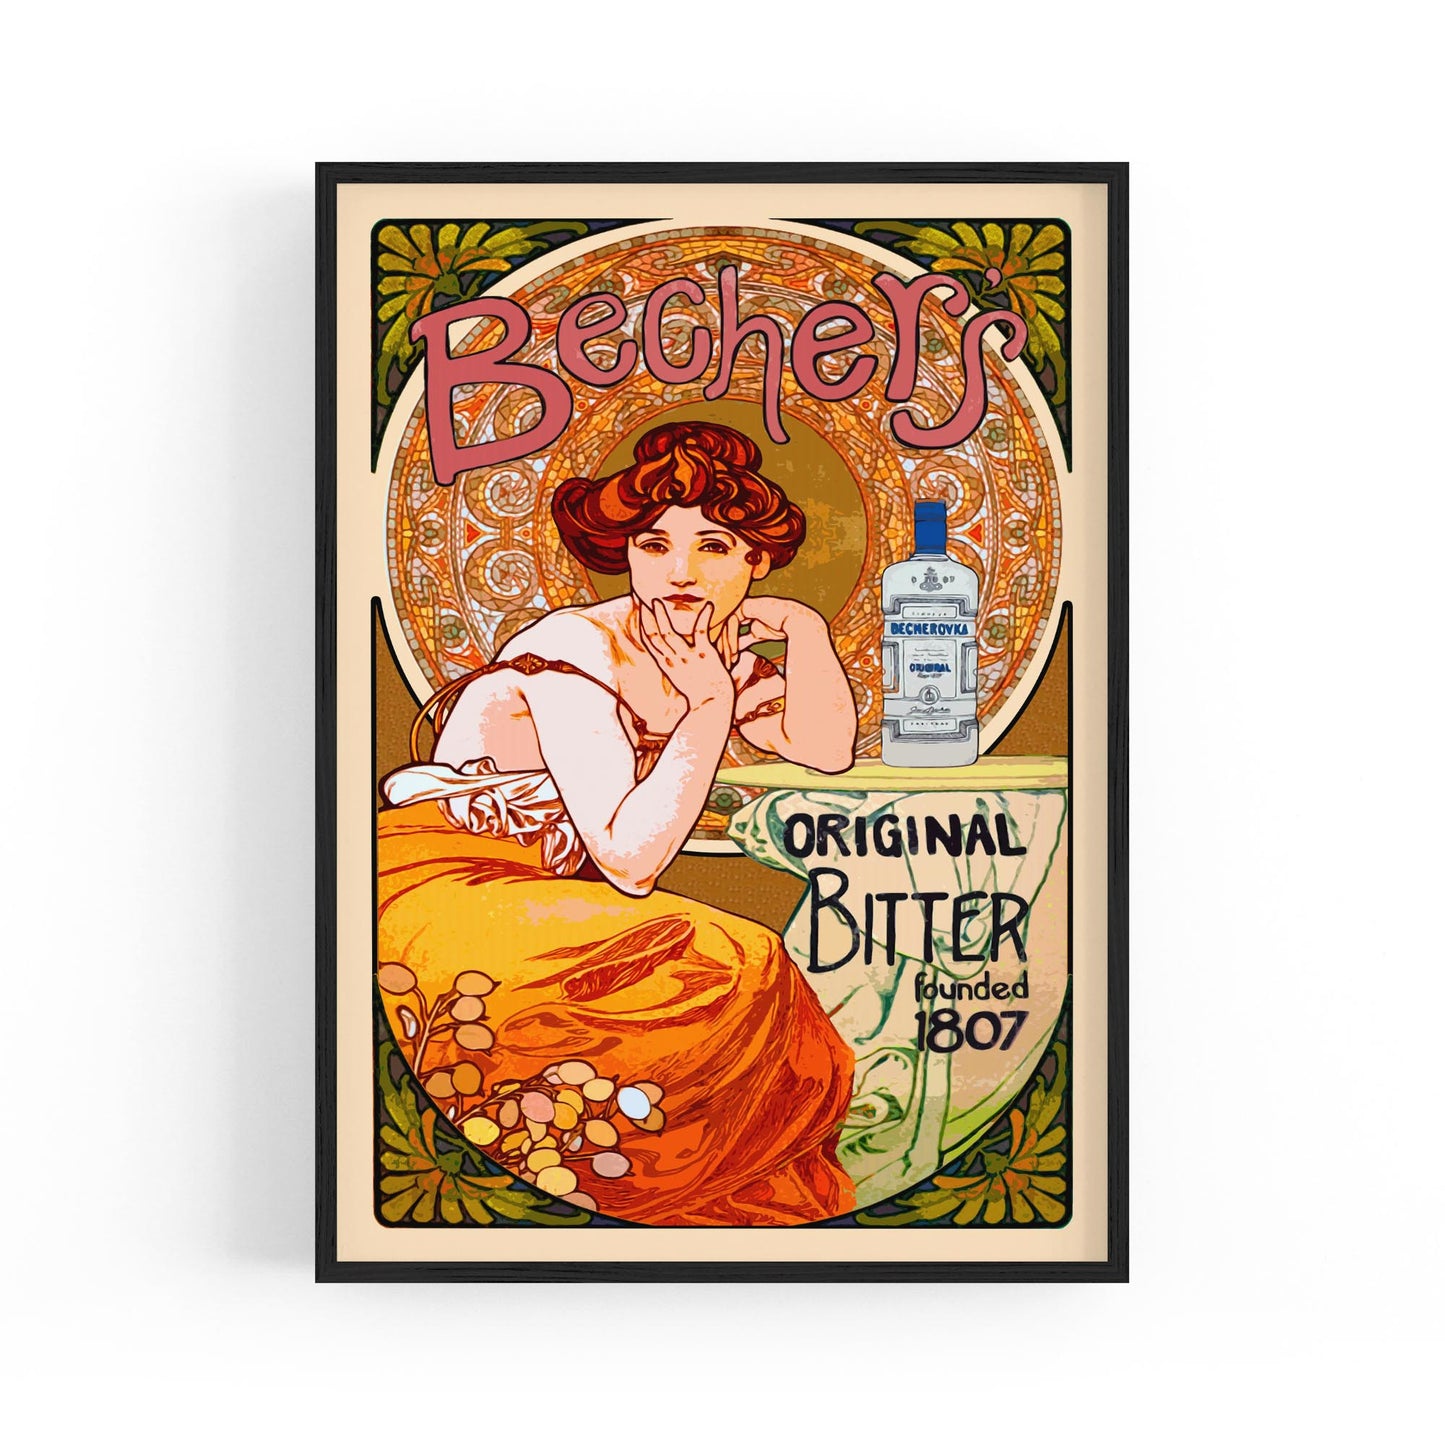 Bechers Bitter Since 1807 by Alphonse Mucha | Framed Vintage Poster